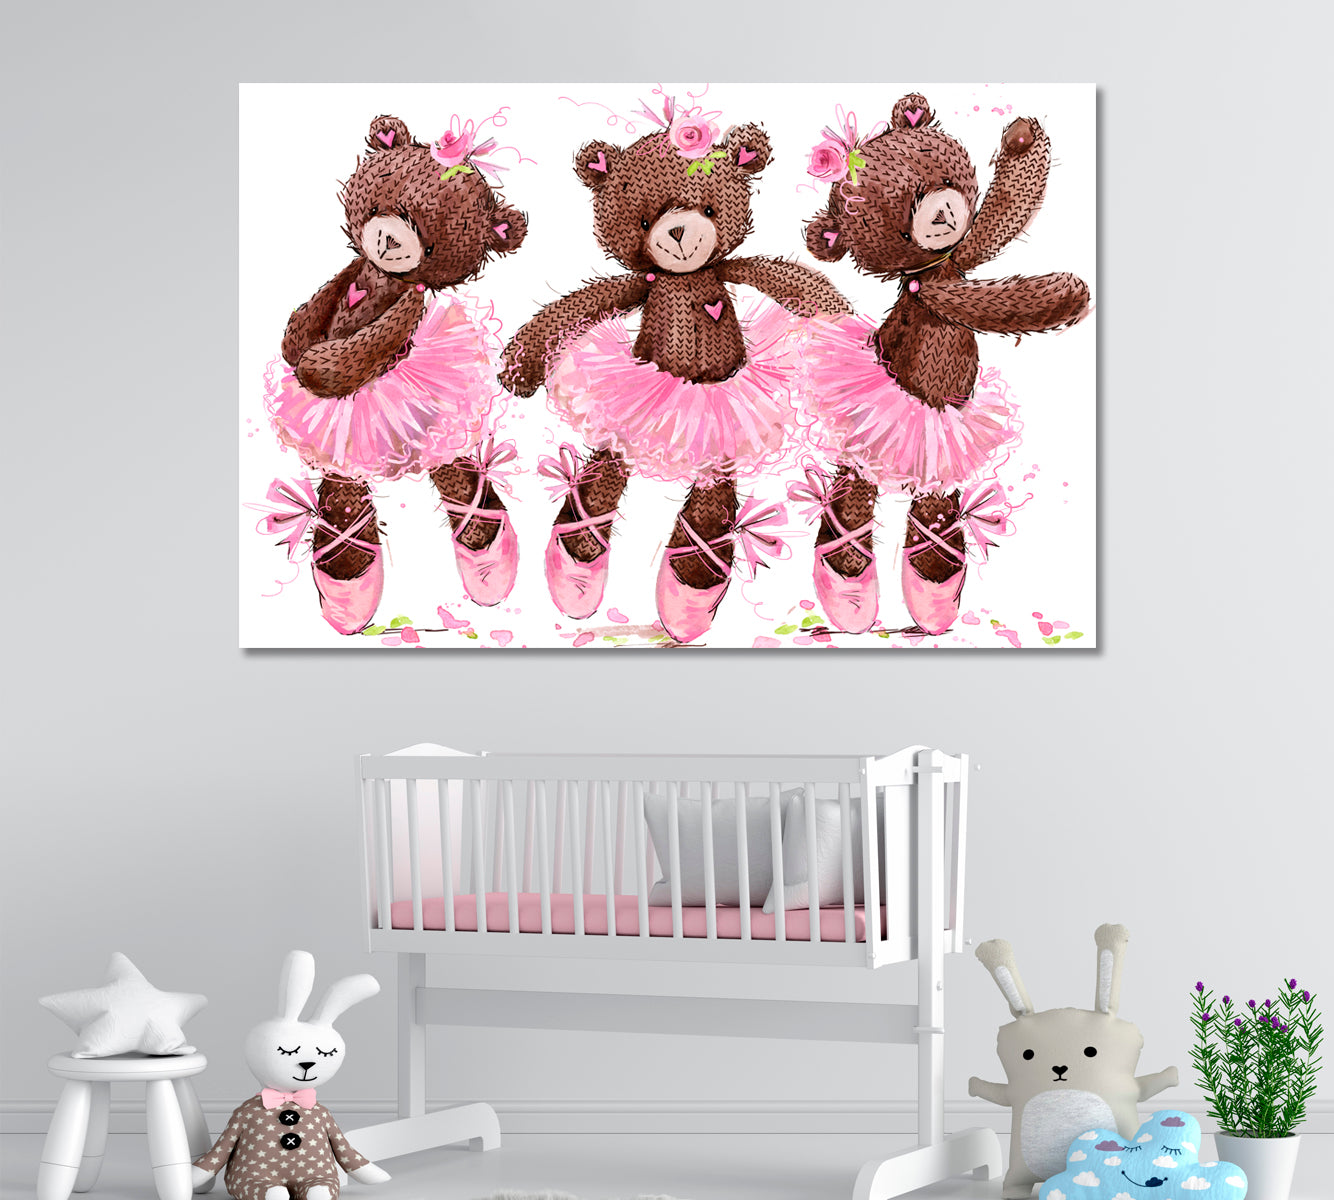 Cute Teddy Bear Ballerina Canvas Print ArtLexy 1 Panel 24"x16" inches 